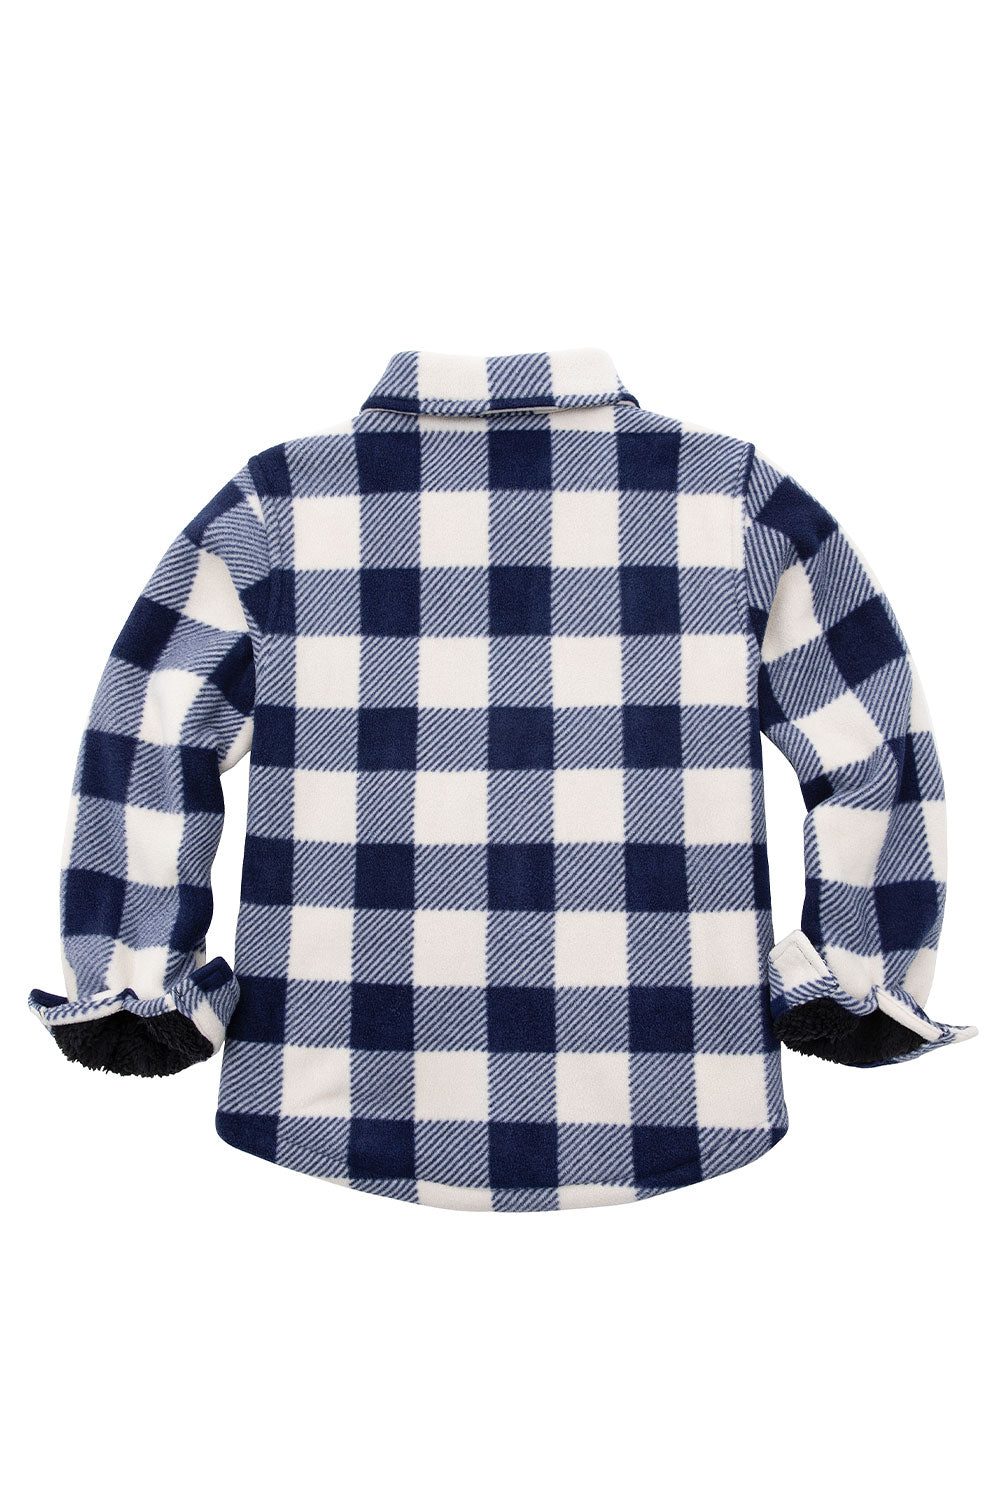 Kids' Cozy Fleece Shirt Jacket, Plaid